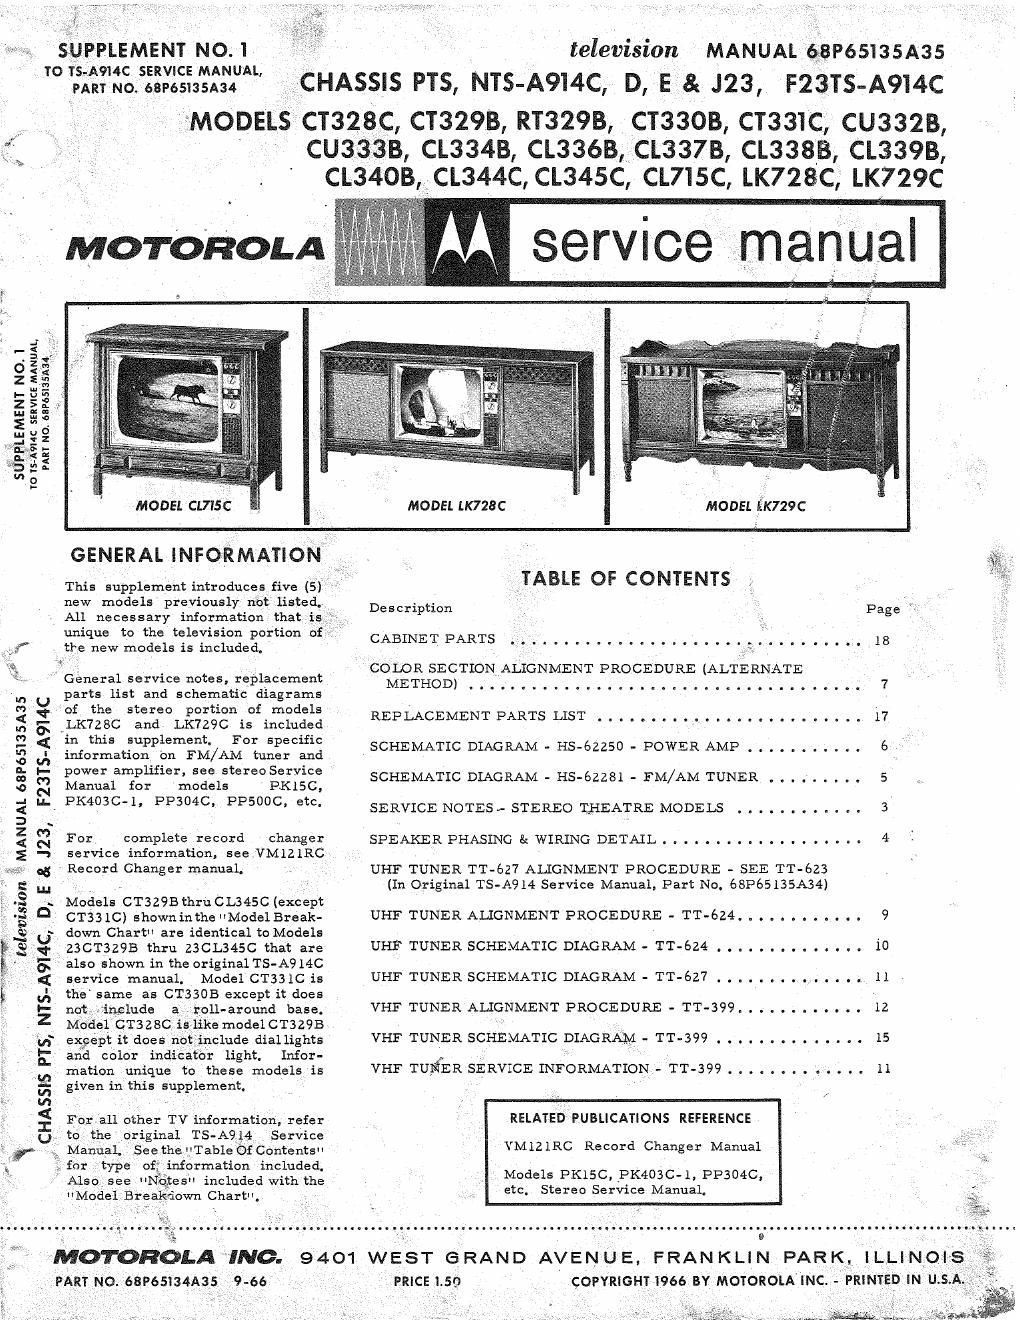 motorola cl 337 b service manual